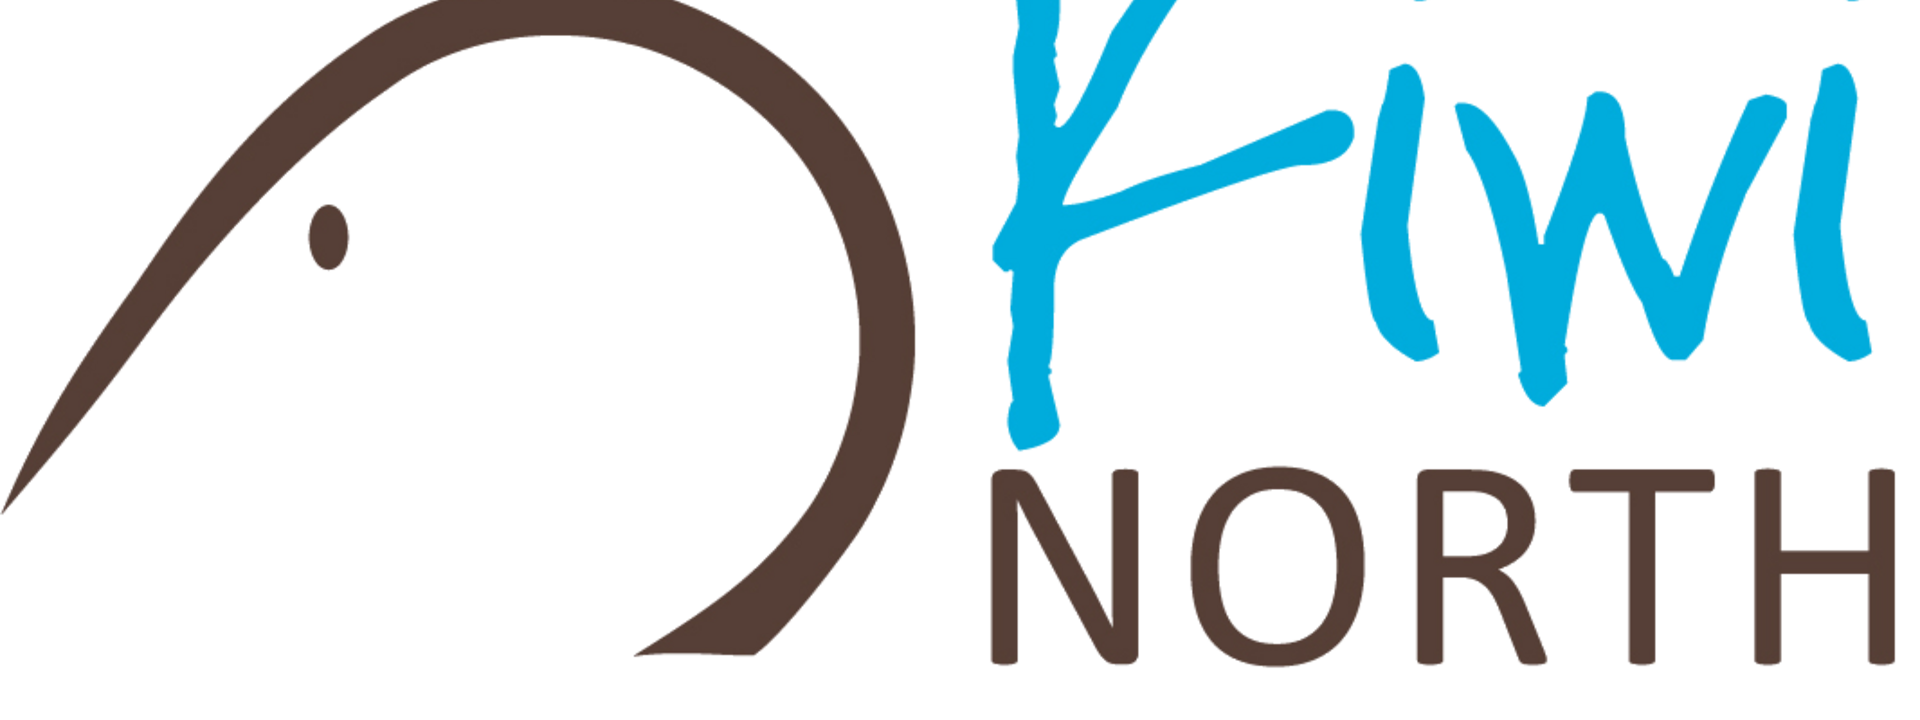 2.-kiwi-north-no-background-logo.png